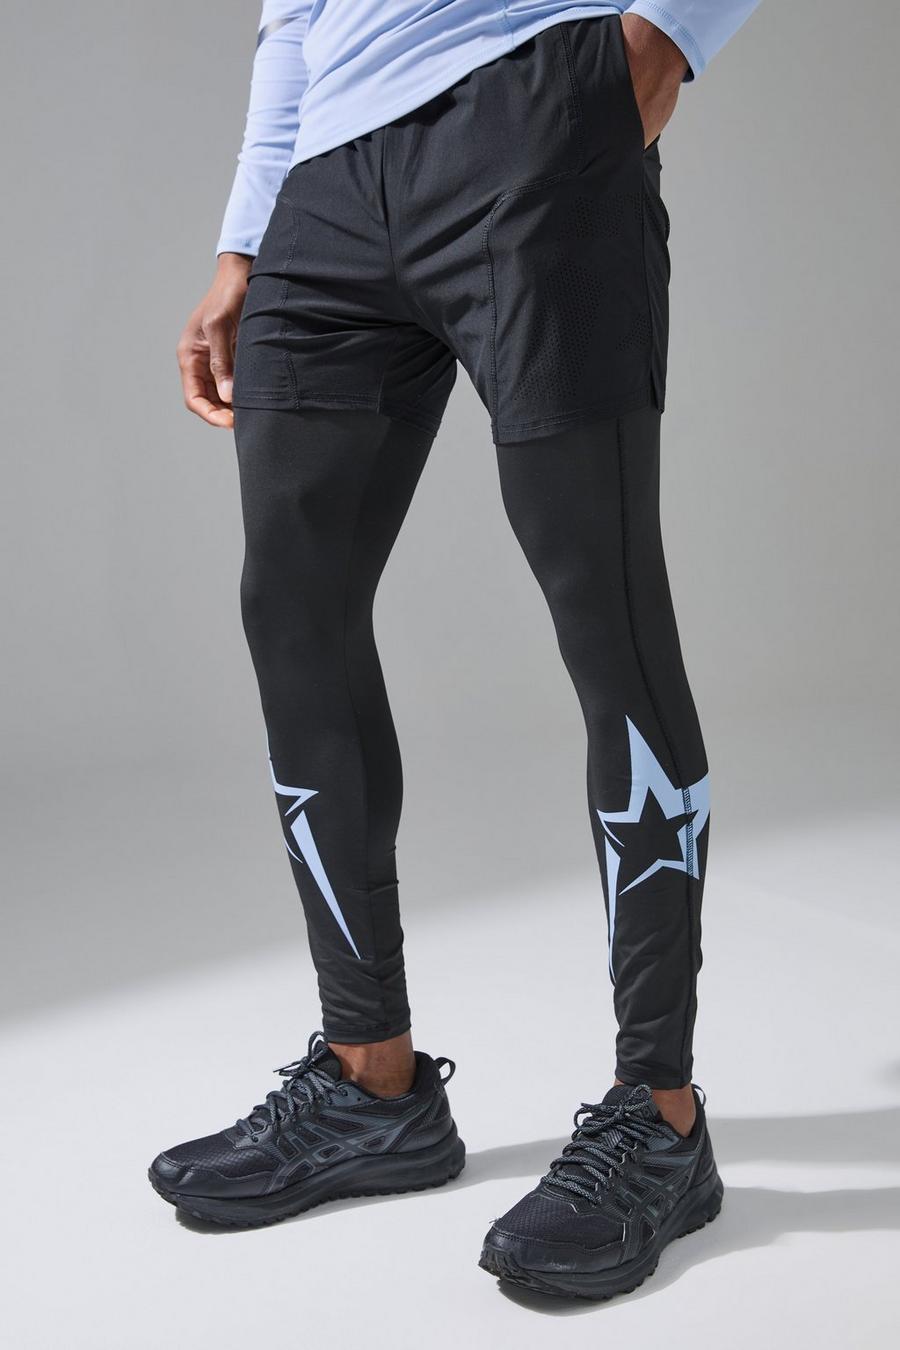 Black Gunna Active 5 Inch Woven Stretch Shorts